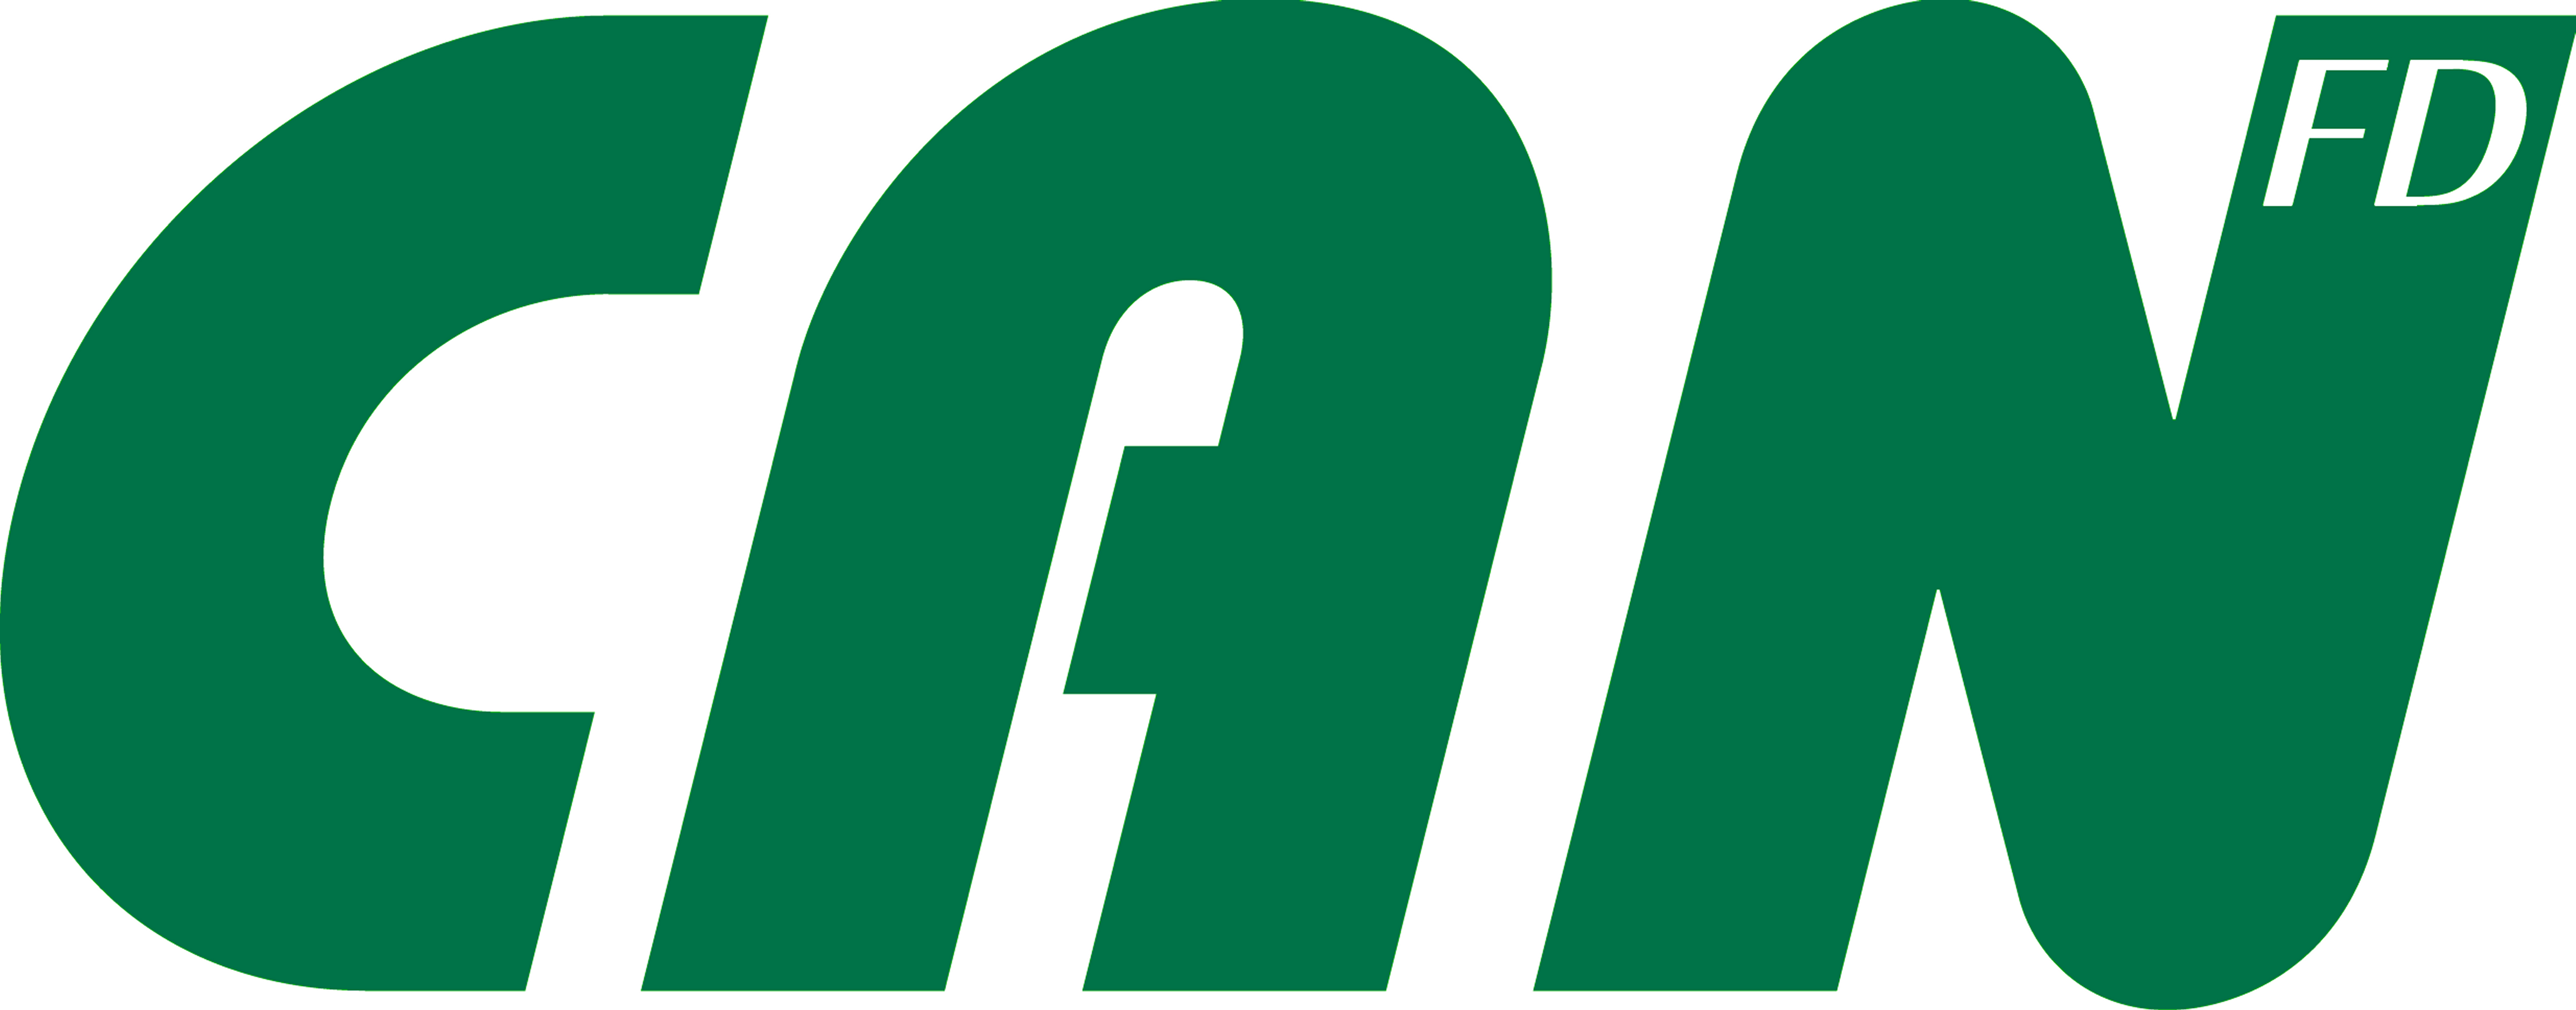 CAN FD Logo